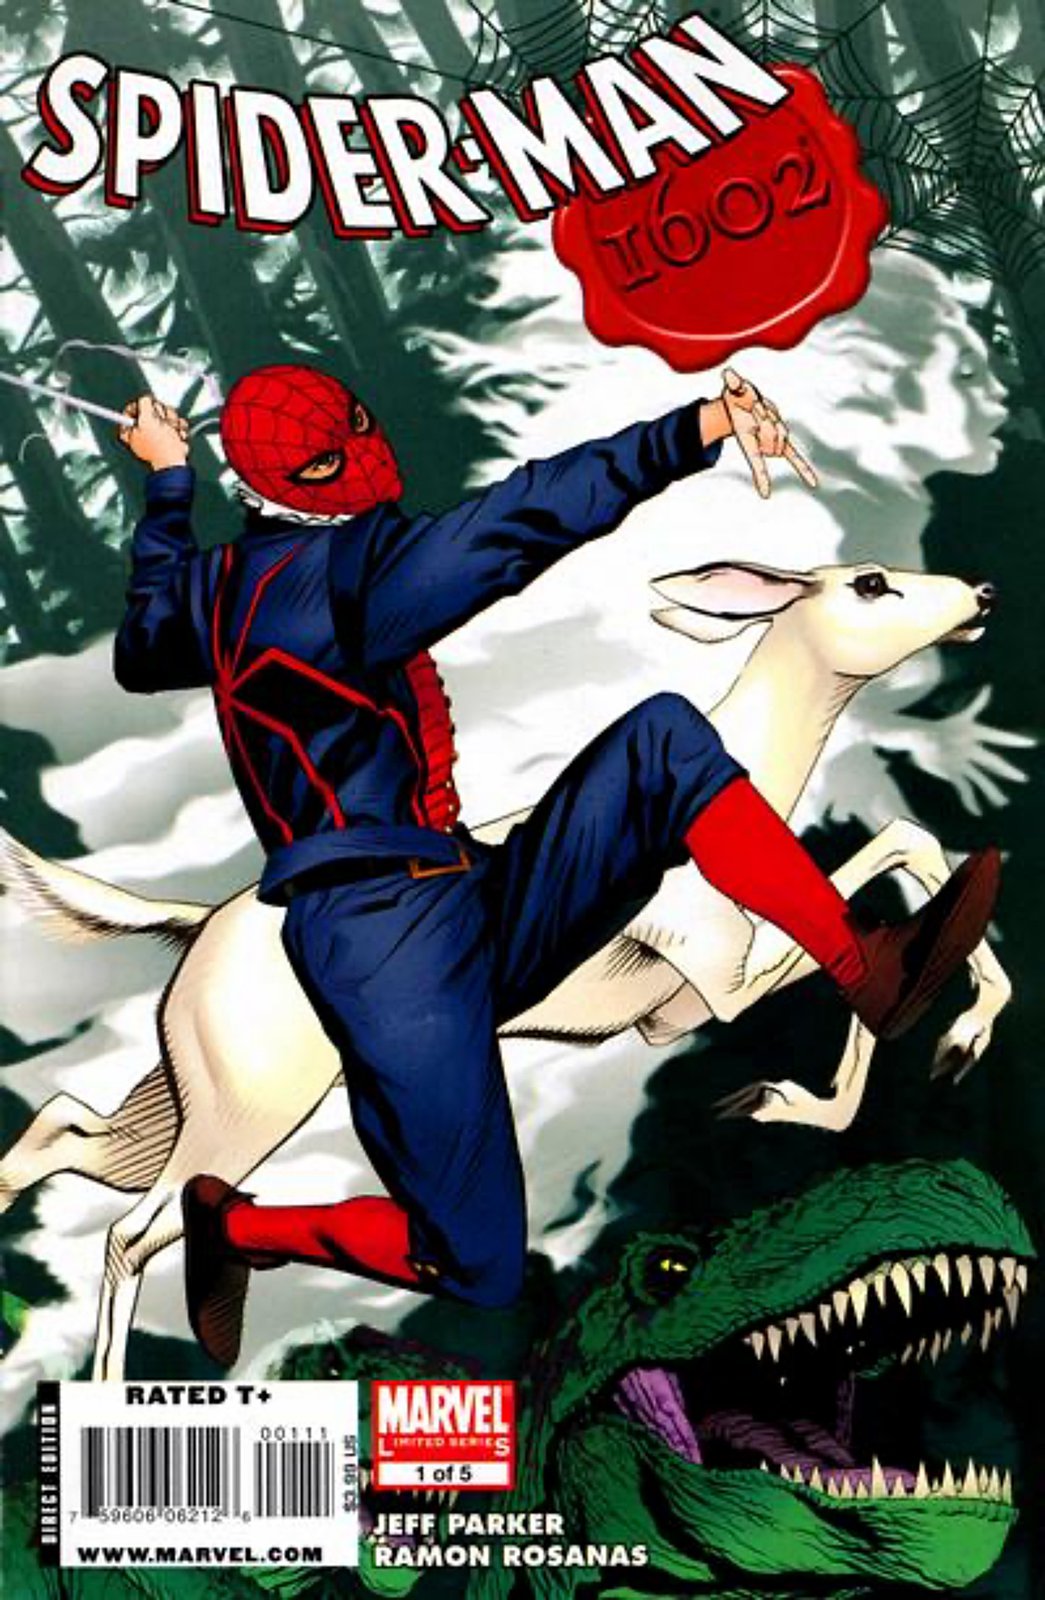 Spider-Man 1602 #1 (2009-2010) Marvel Comics